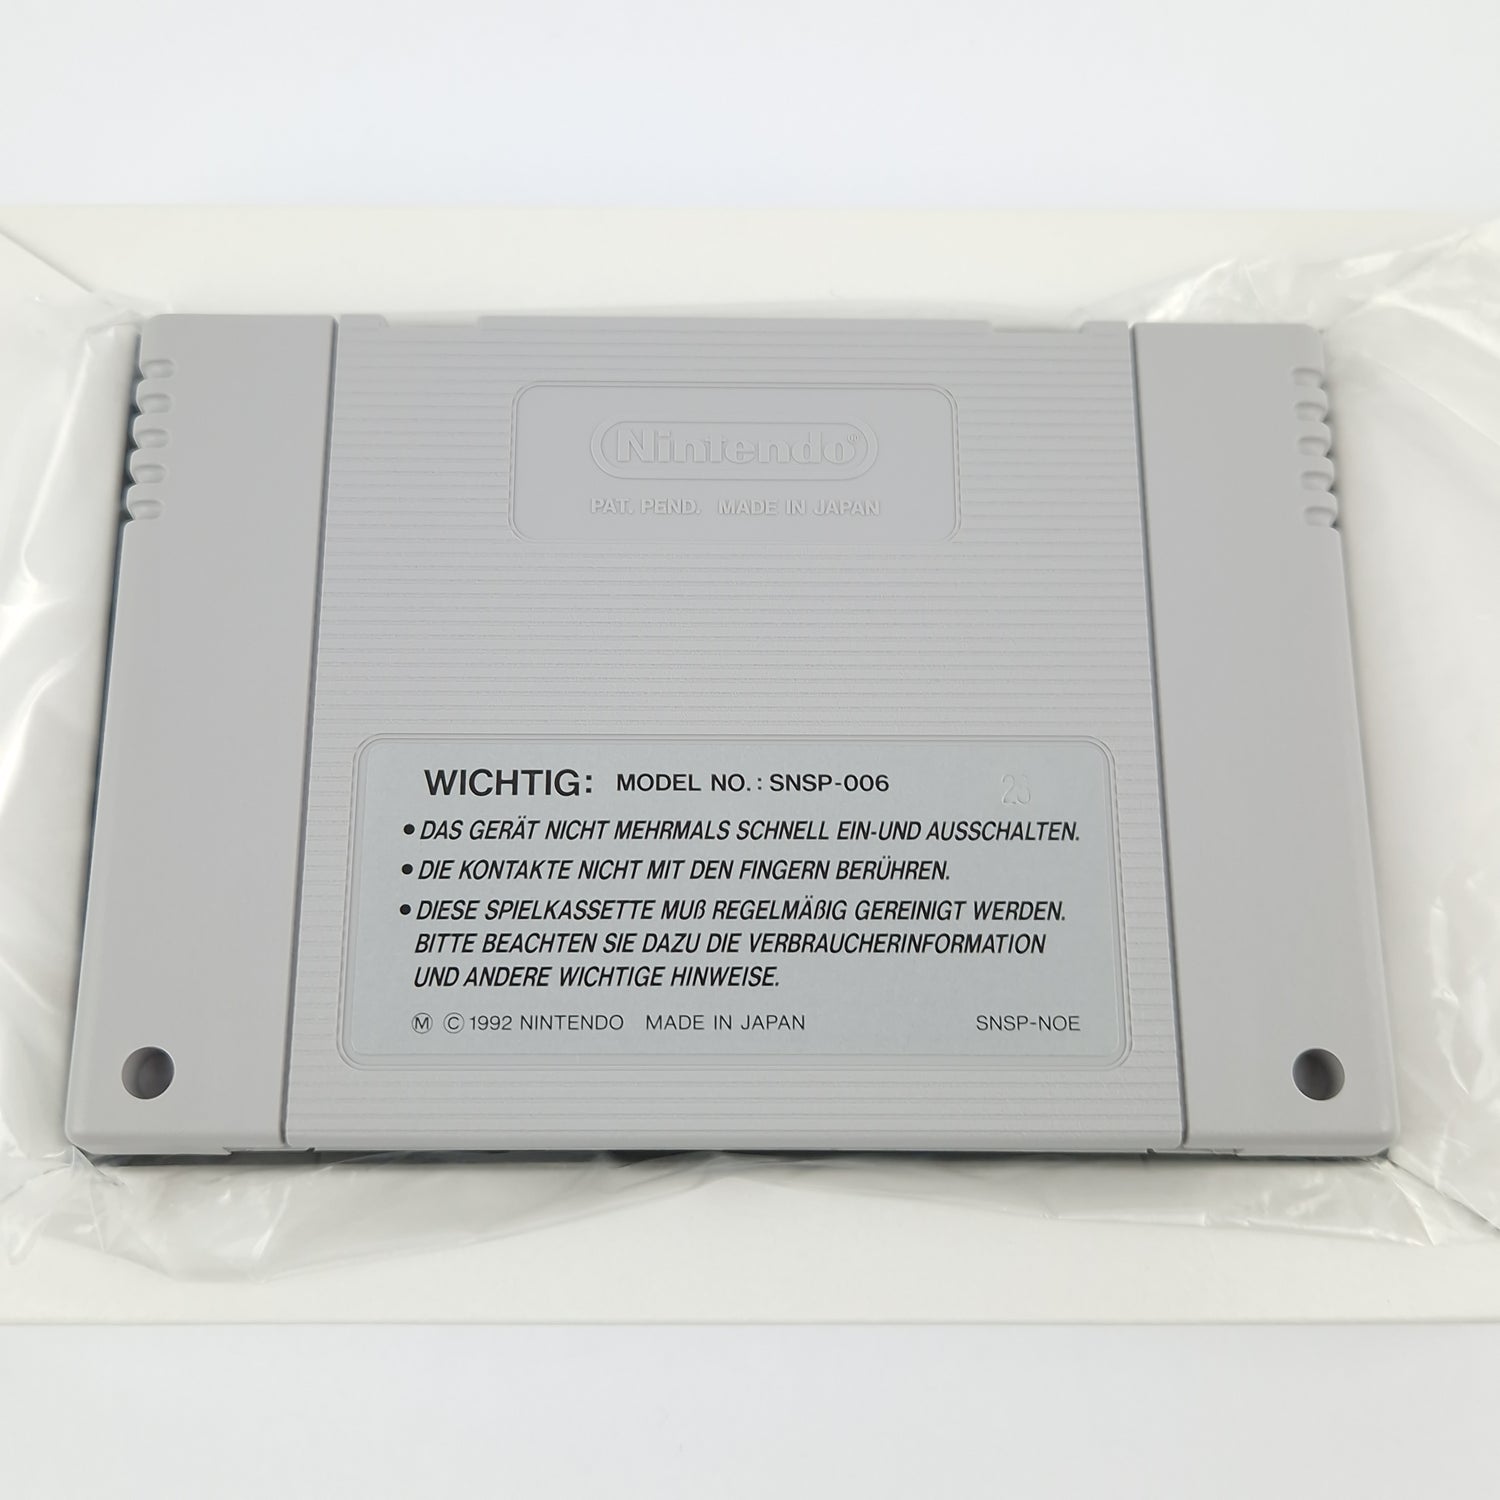 Super Nintendo Game: Flashback - Module Instructions OVP cib / SNES PAL NOE